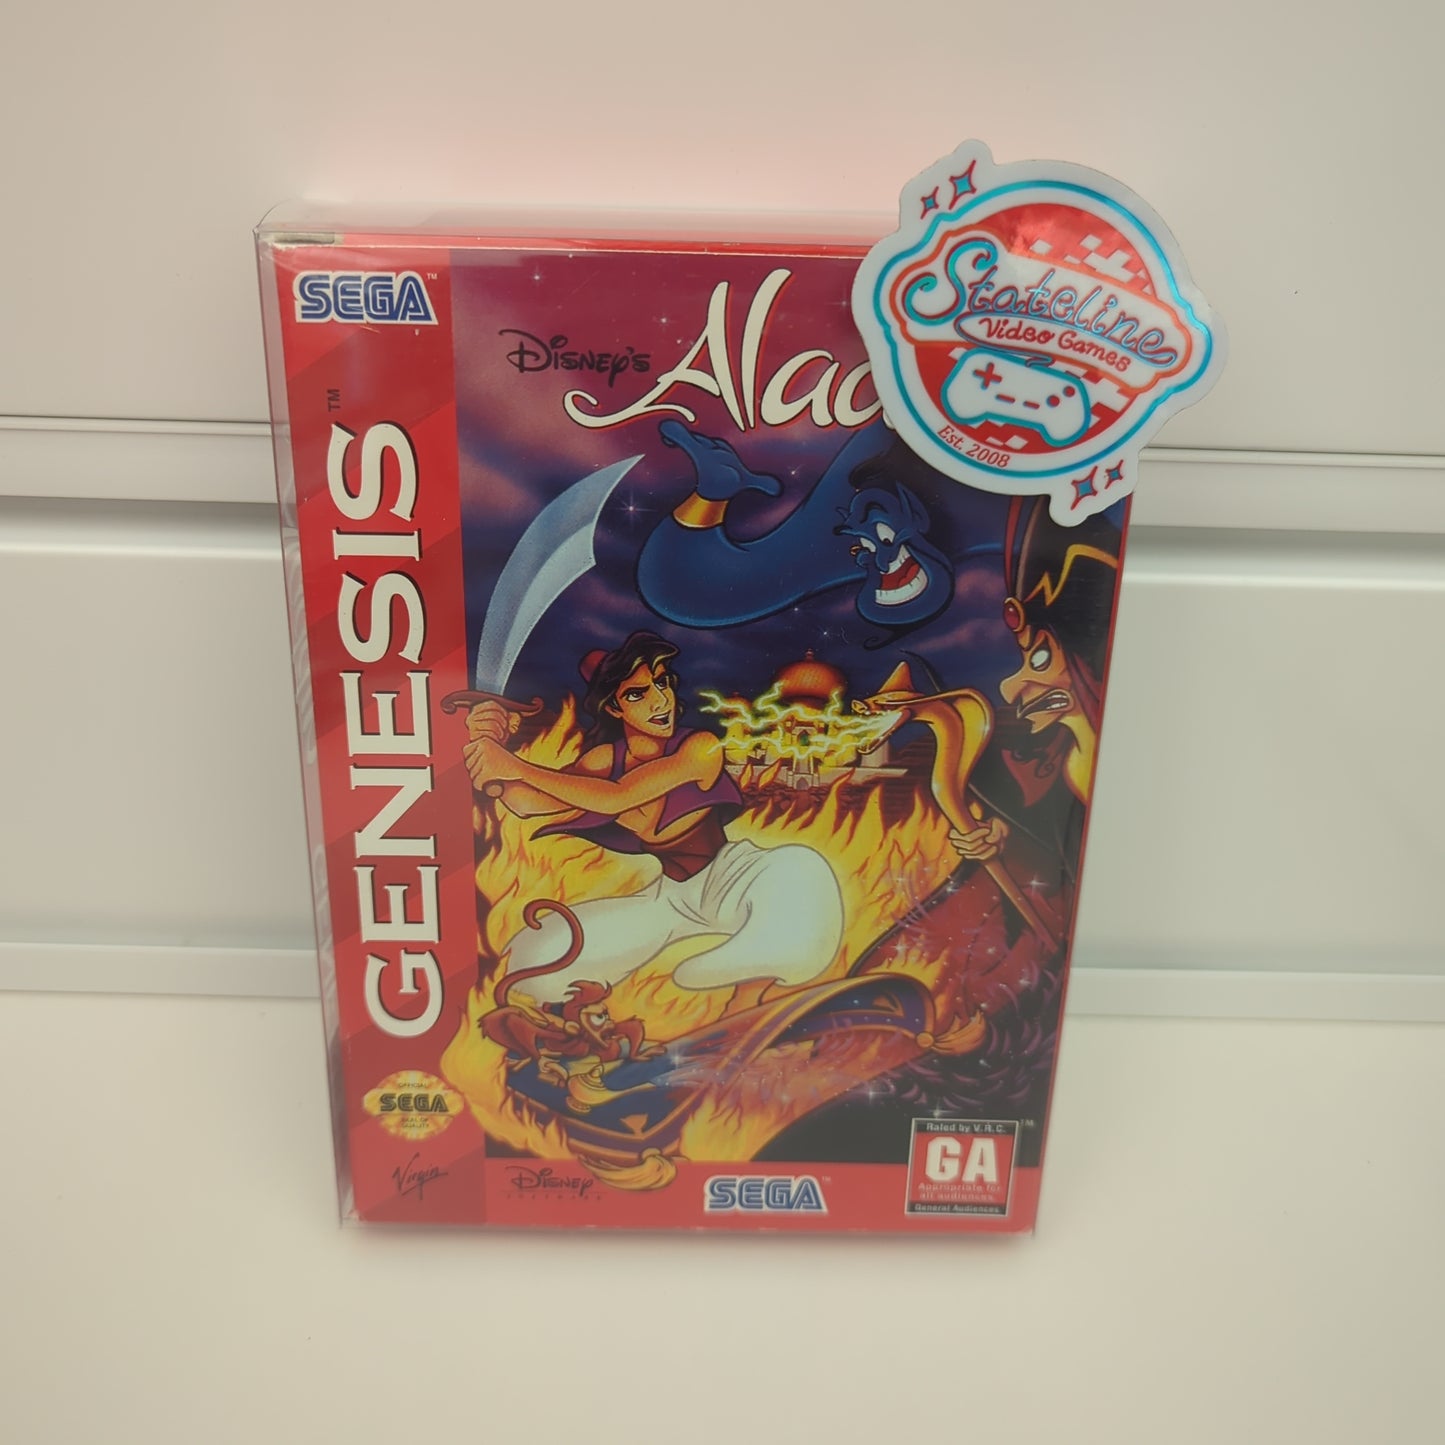 Aladdin - Sega Genesis